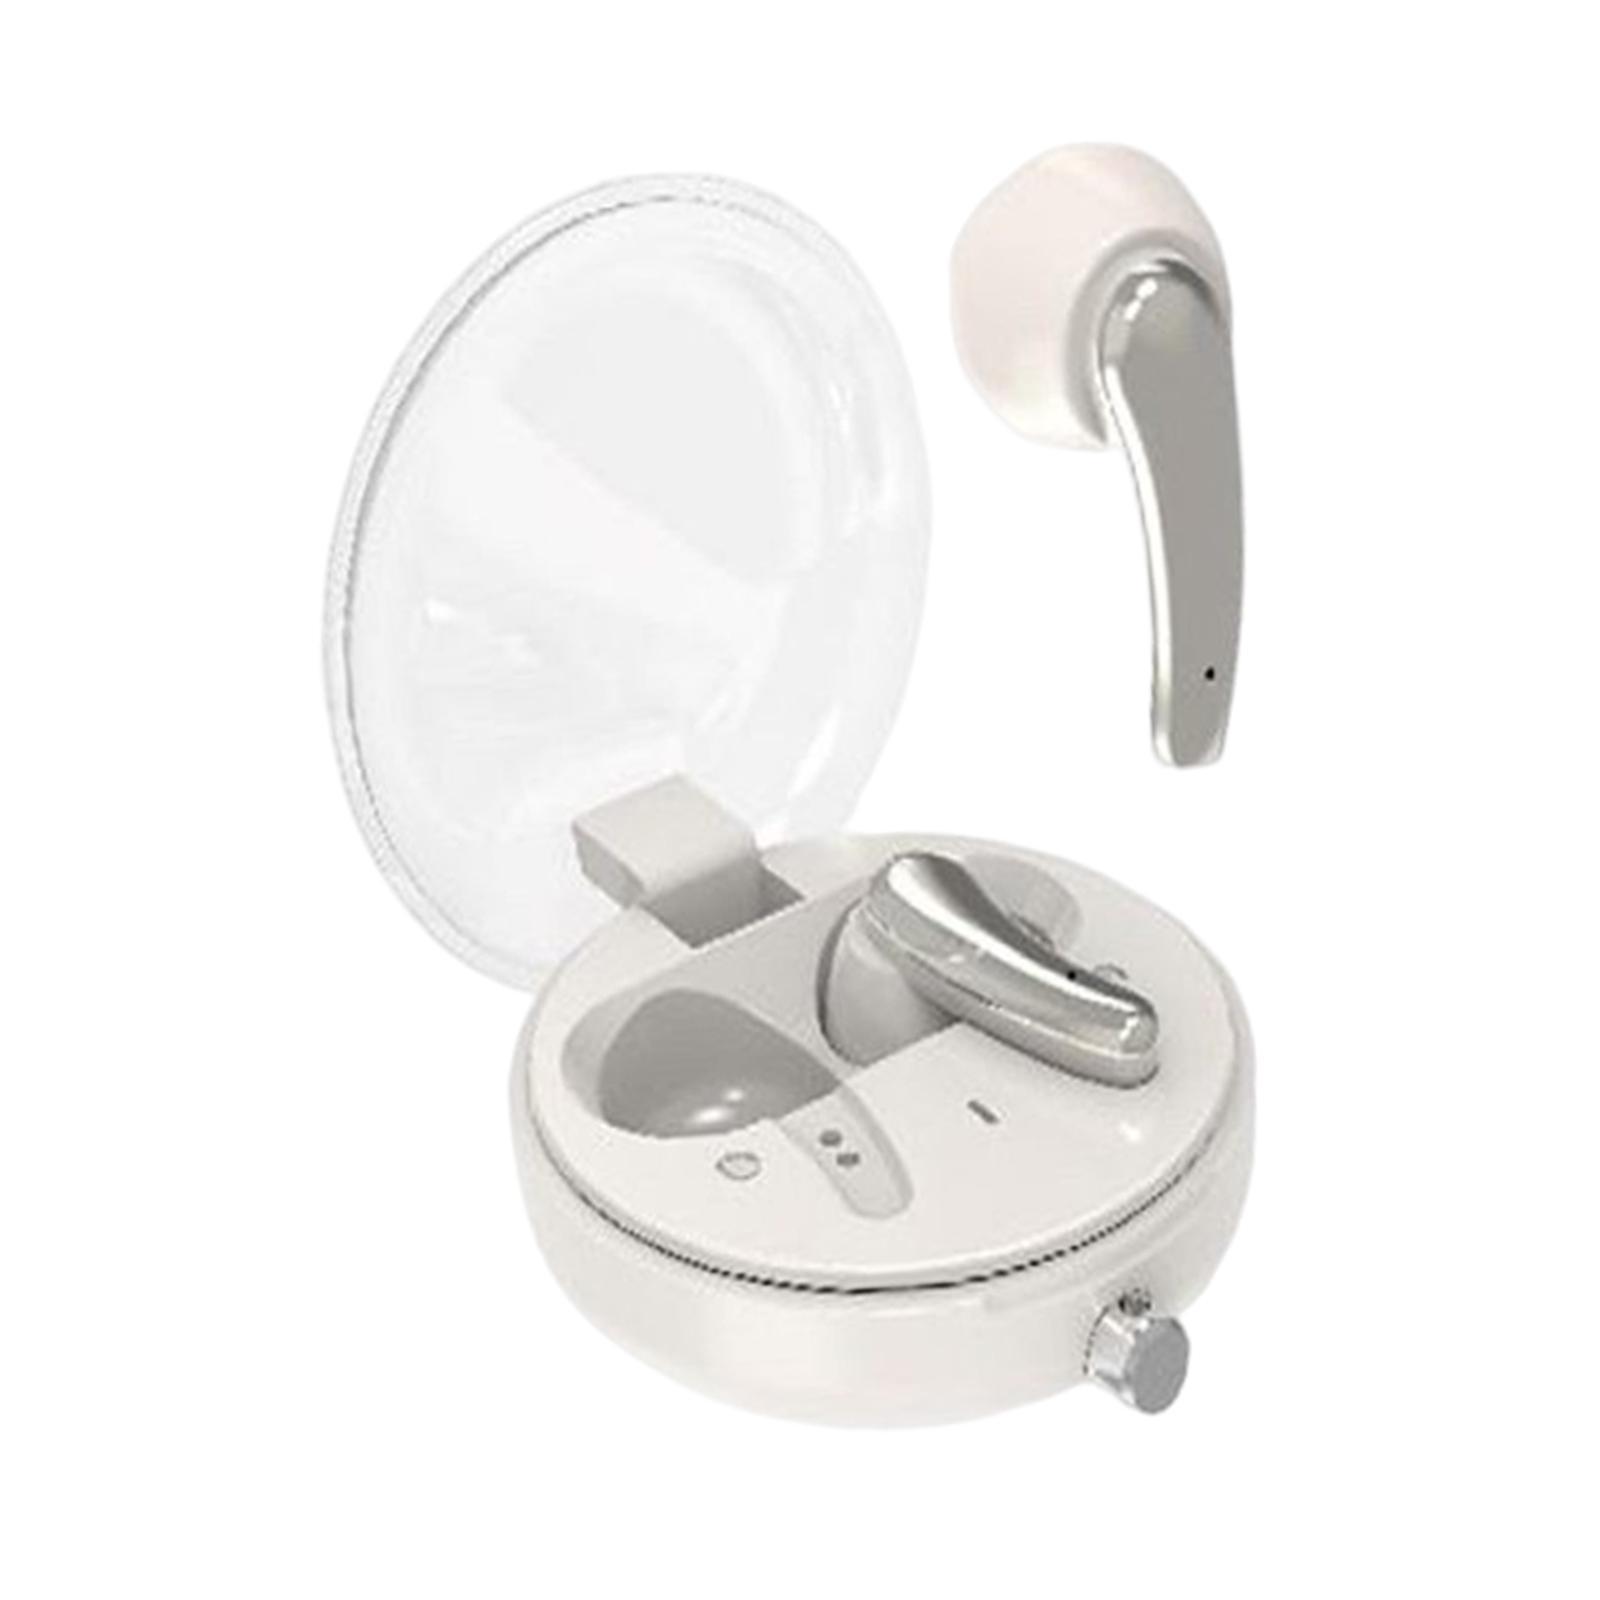 V5.3 Headphones Earphones Earpiece HiFi Sound for Running Workout Business